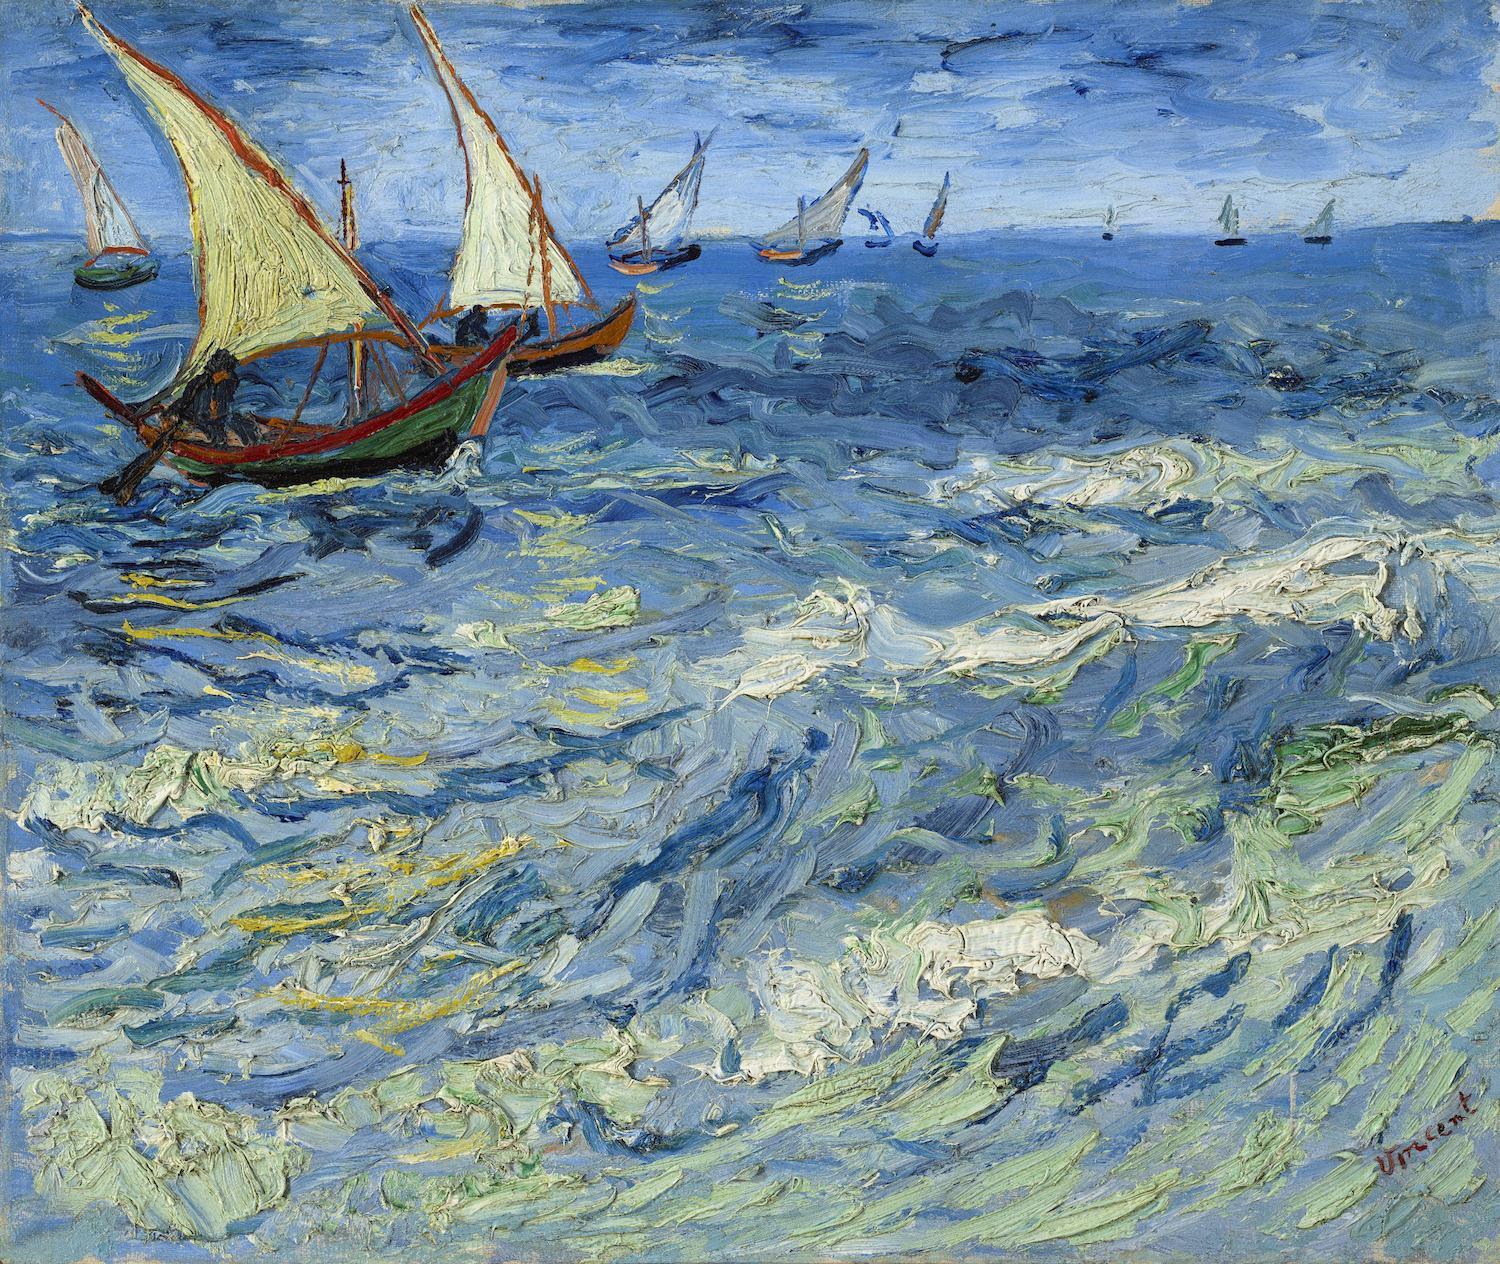 Image: Seascape at Saintes Maries, Saintes Maries de la Mer, by Vincent van Gogh, 1888